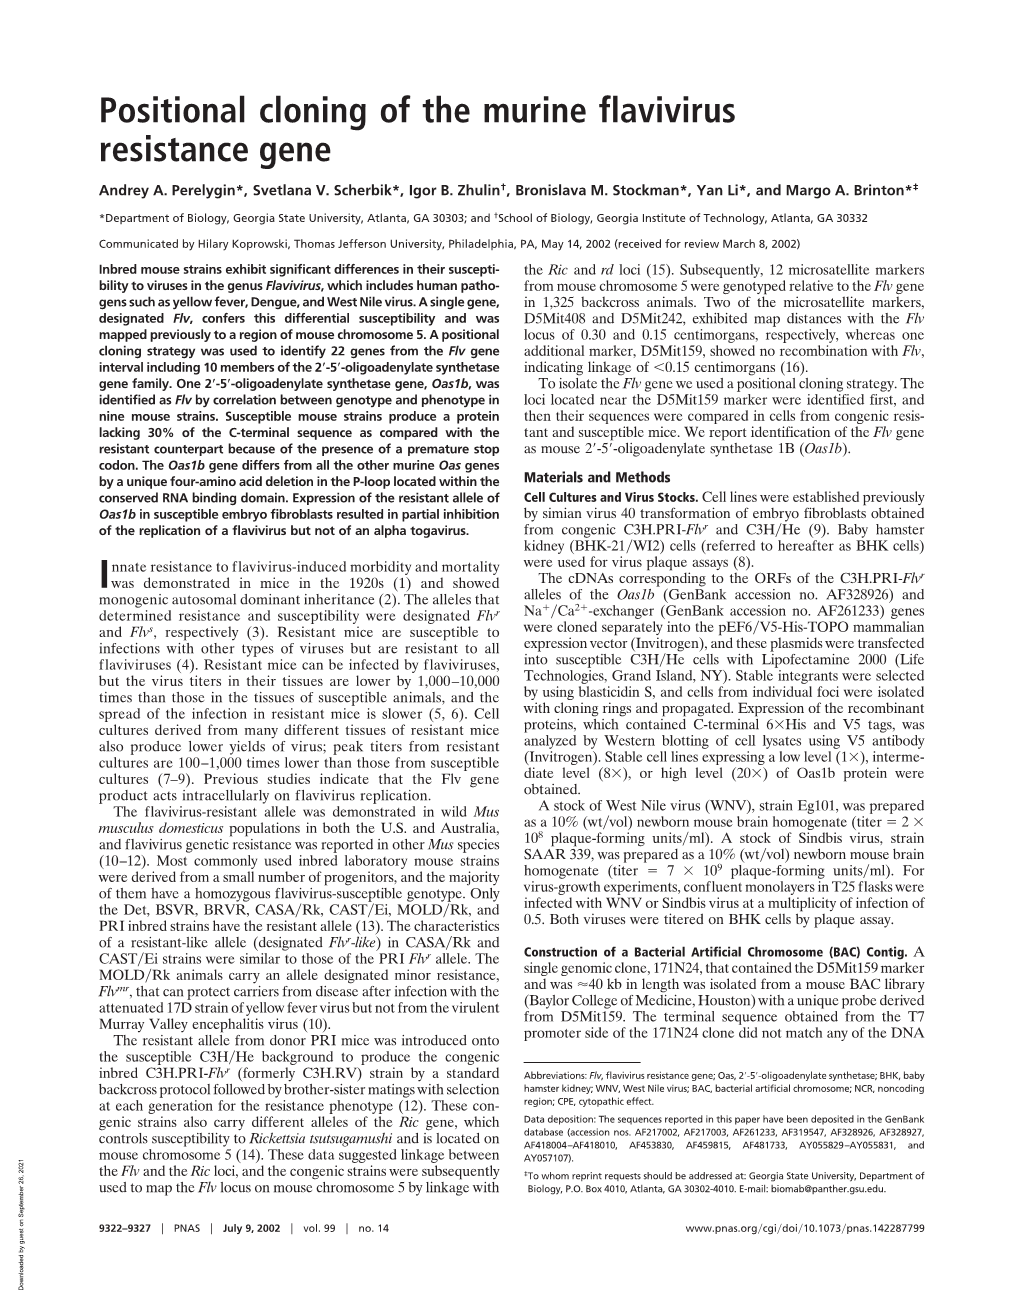 Positional Cloning of the Murine Flavivirus Resistance Gene